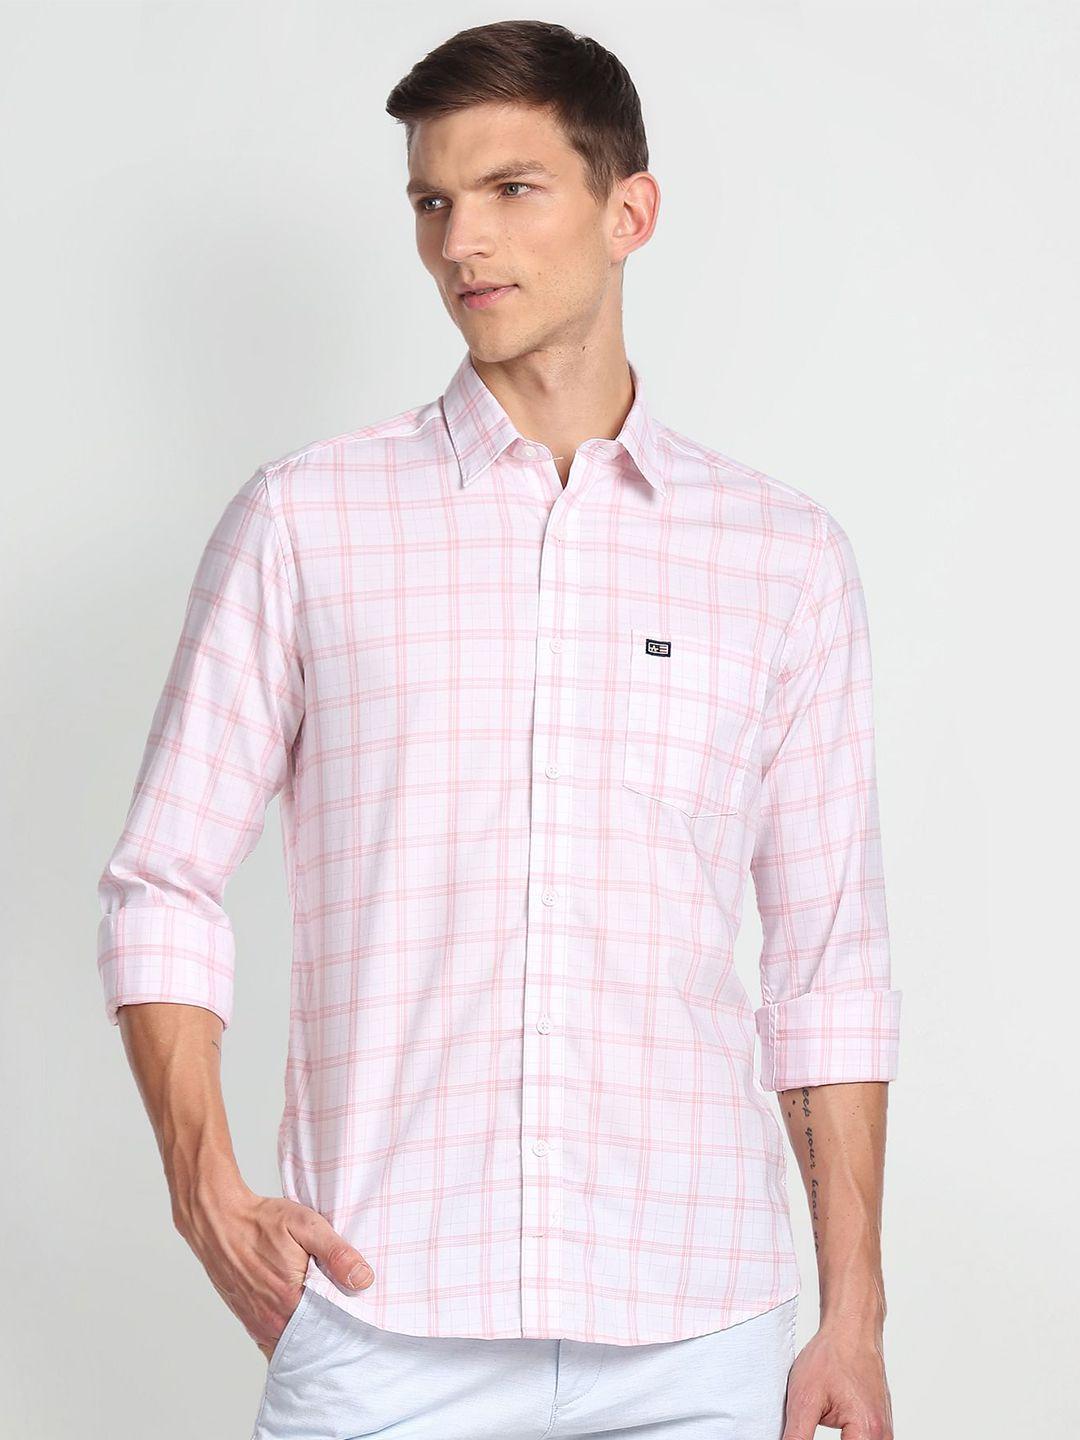 arrow-sport-checked-spread-collar-slim-fit-cotton-casual-shirt